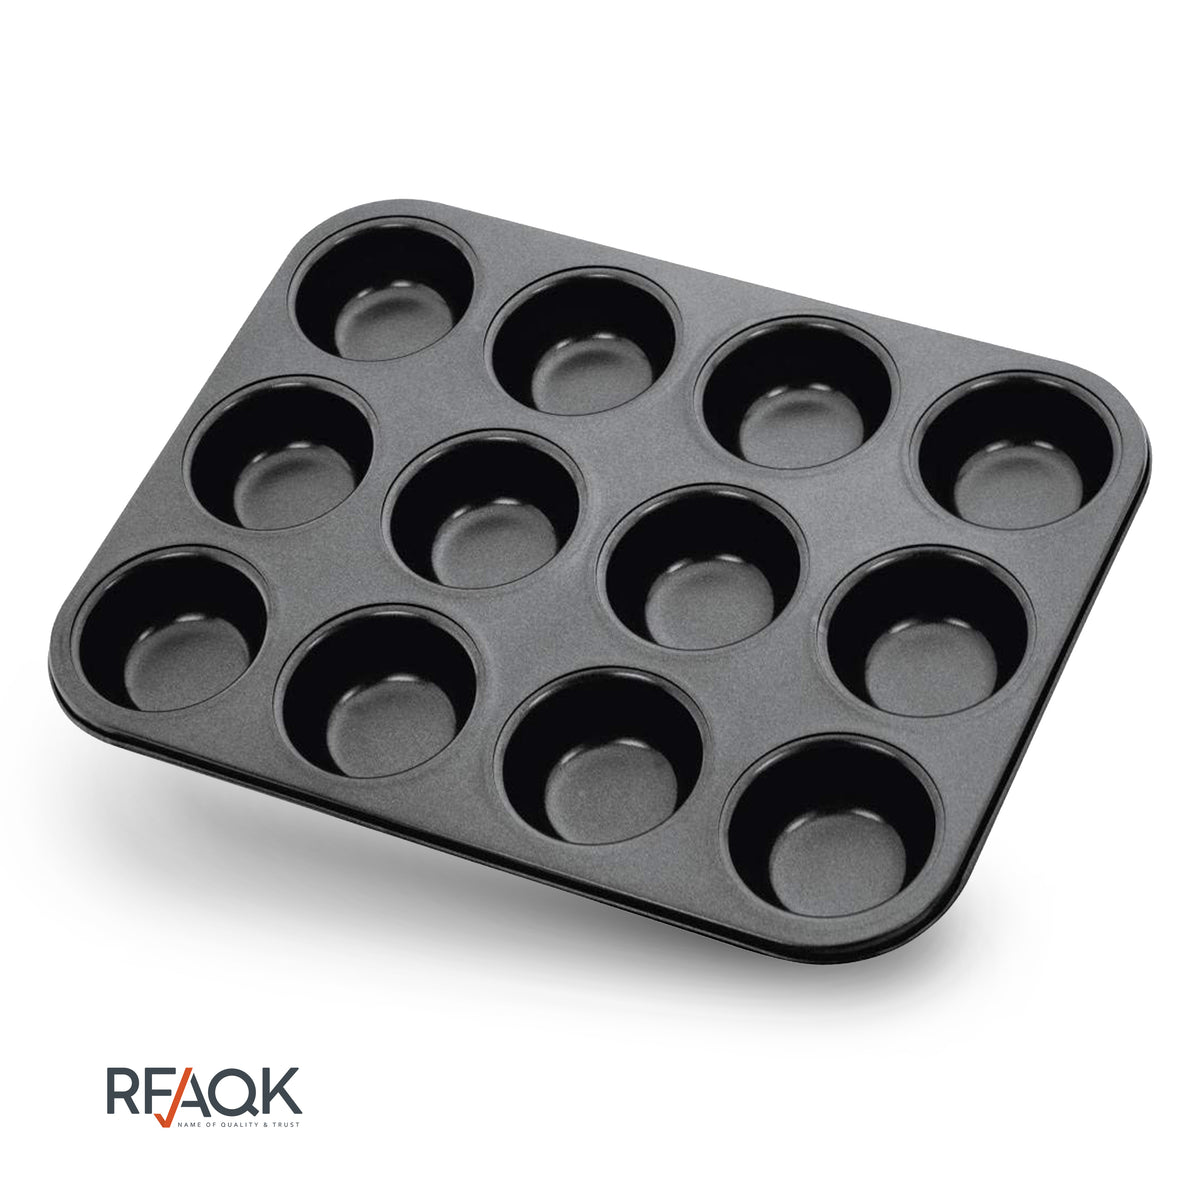 12 Slots Non-stick cupcake baking tray -RFAQK